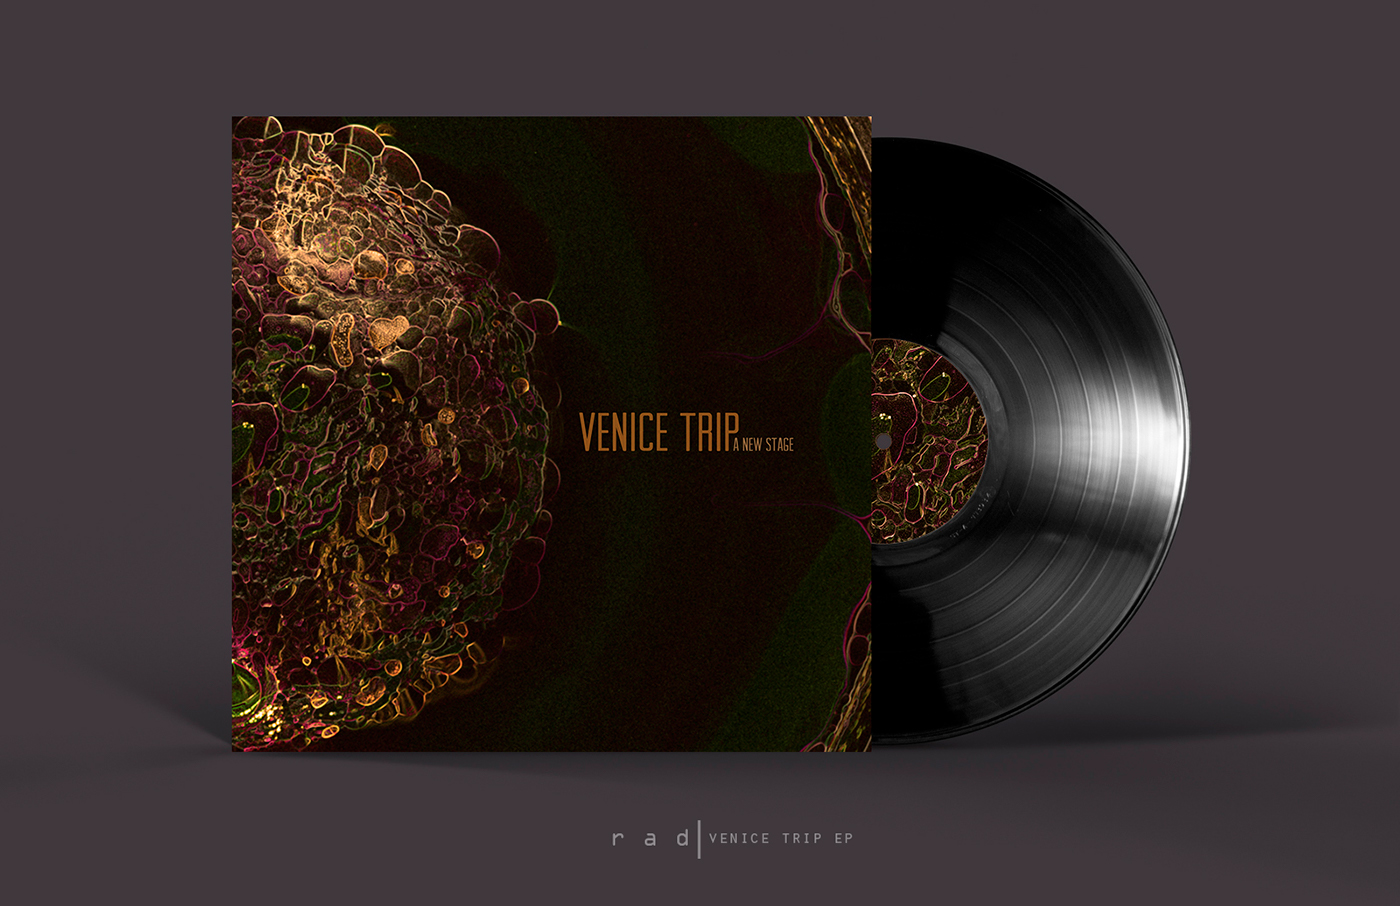 ep vinyl Cover Art band VENICE TRIP ROBBIE ANSON DUNCAN rad ferrofluid psychedelic psychedelia science